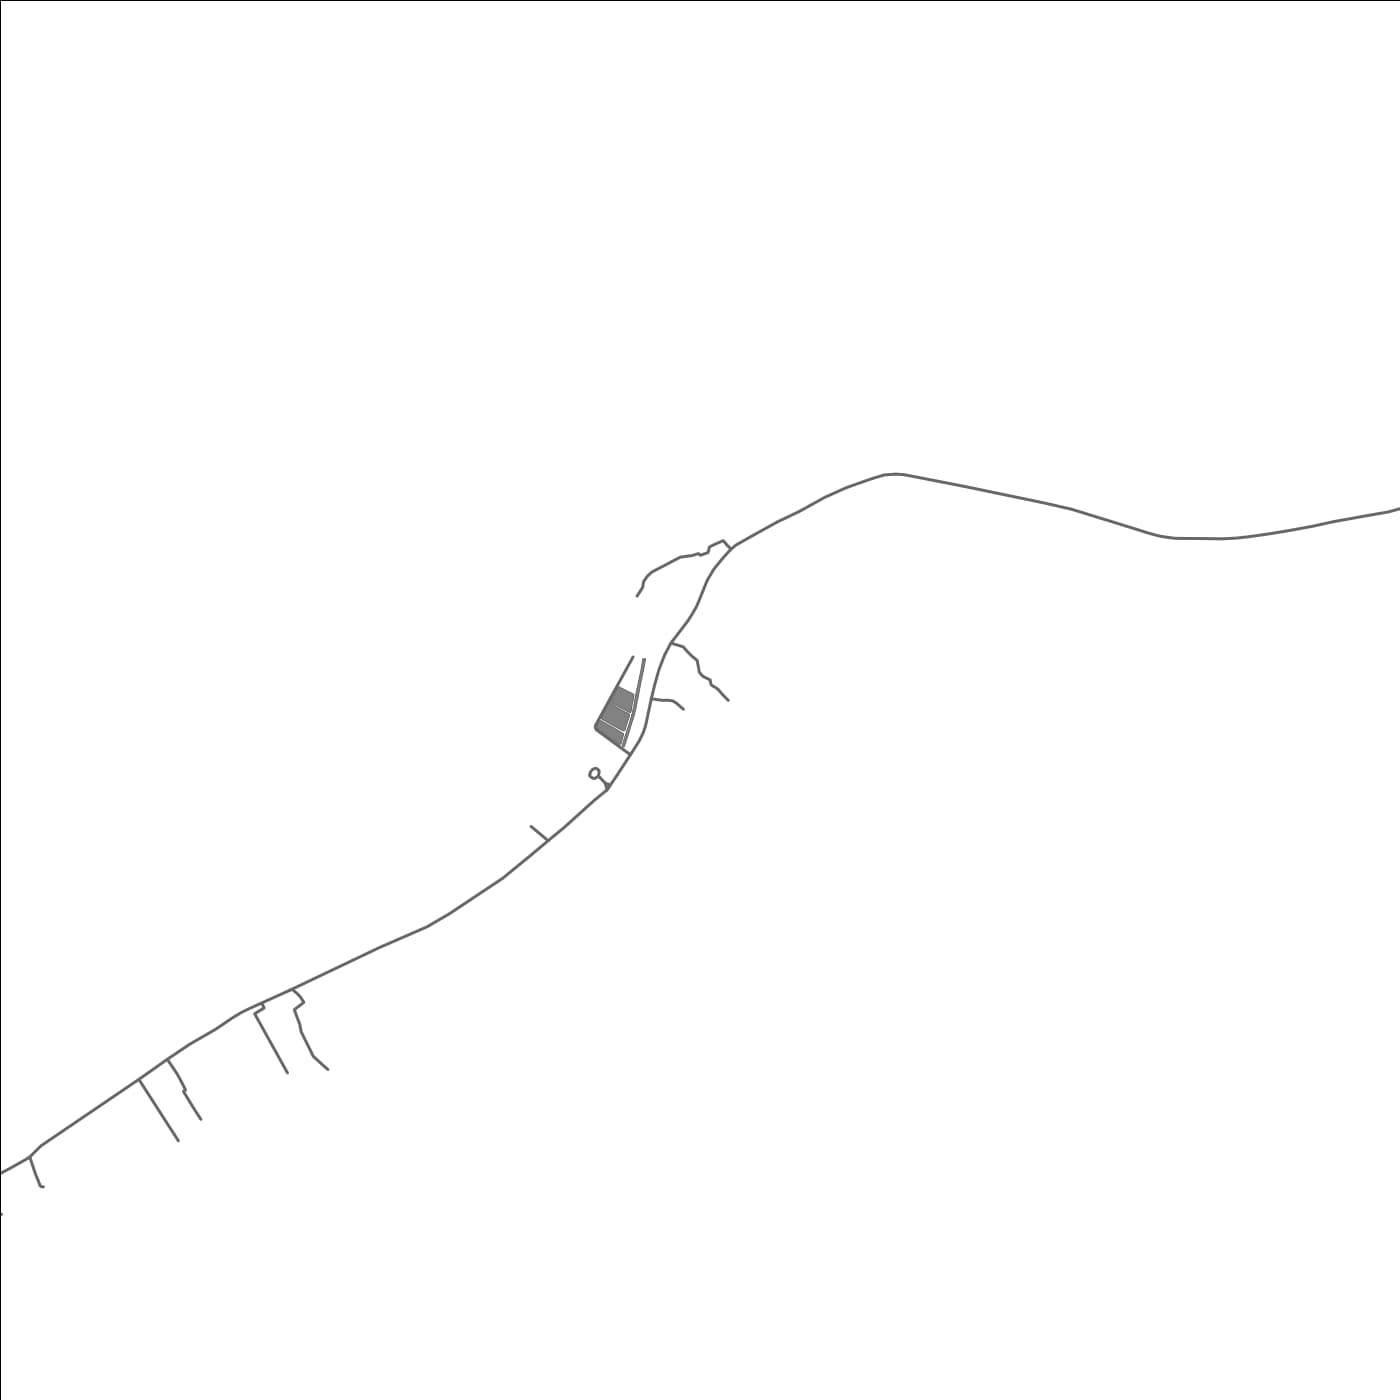 ROAD MAP OF AMBO, KIRIBATI BY MAPBAKES